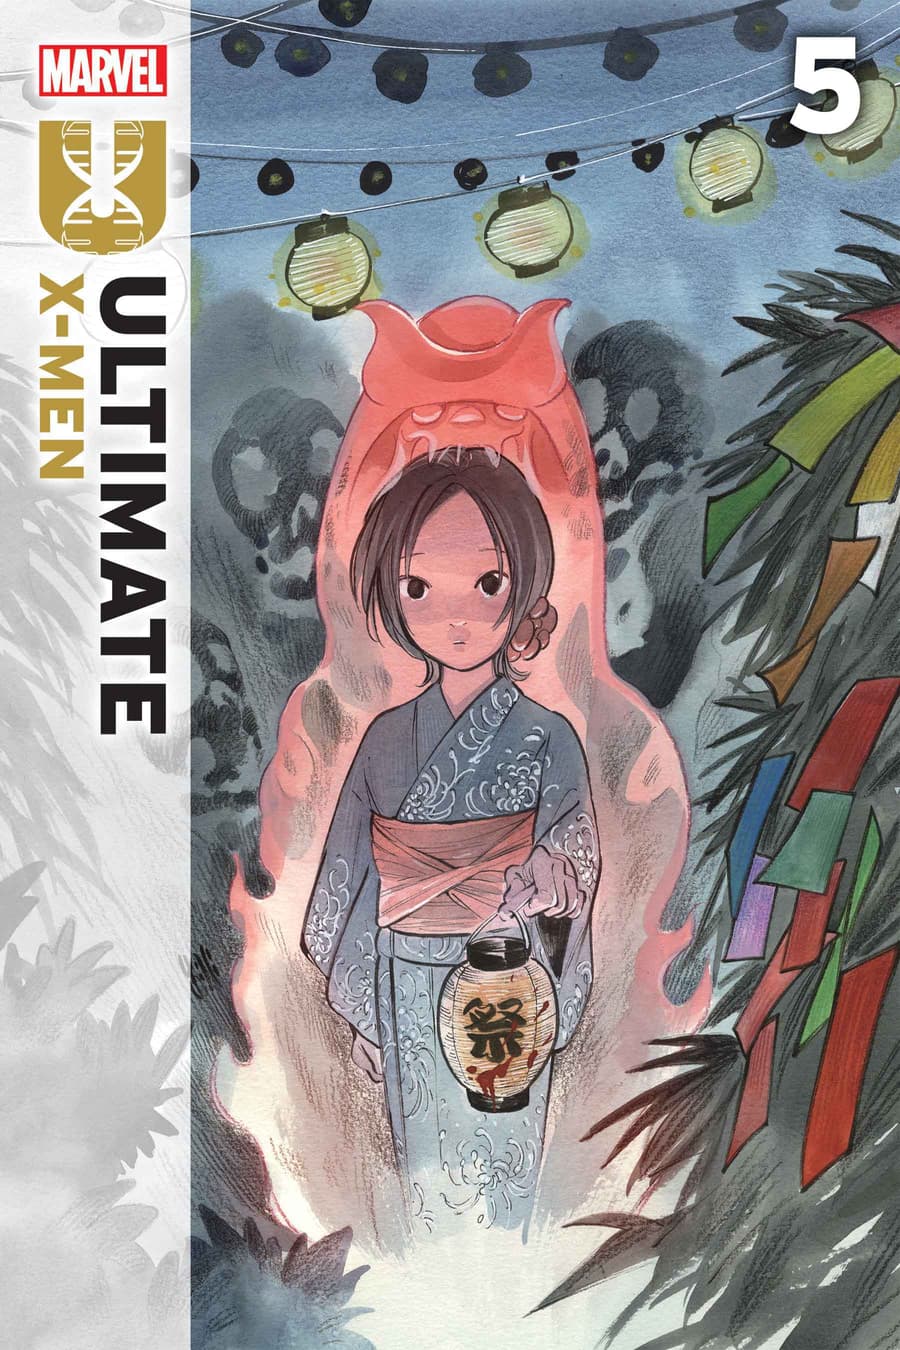 ULTIMATE X-MEN #5 cover by Peach Momoko